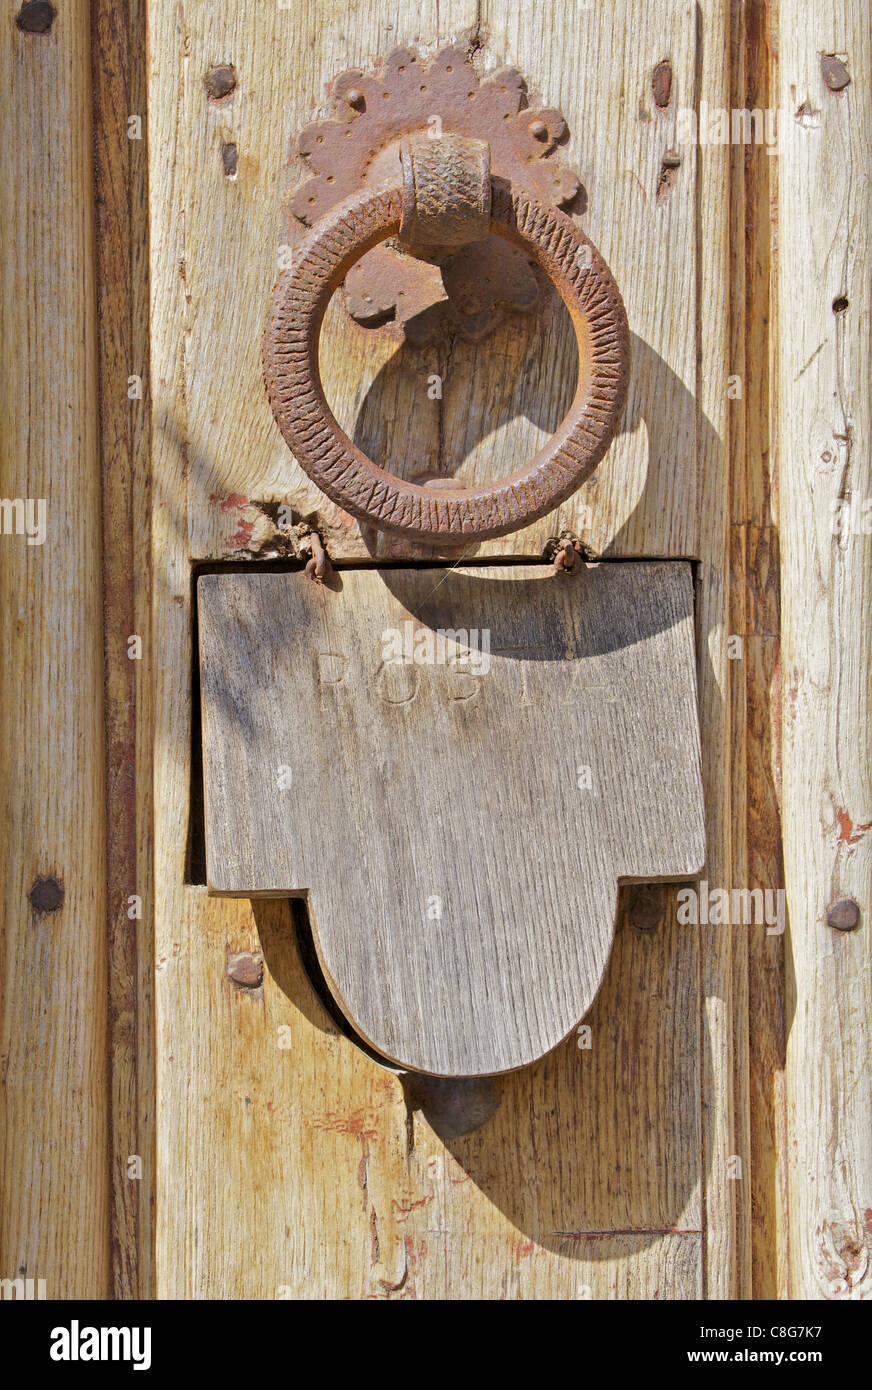 Hand Forged Iron Door Handle Stock Photo